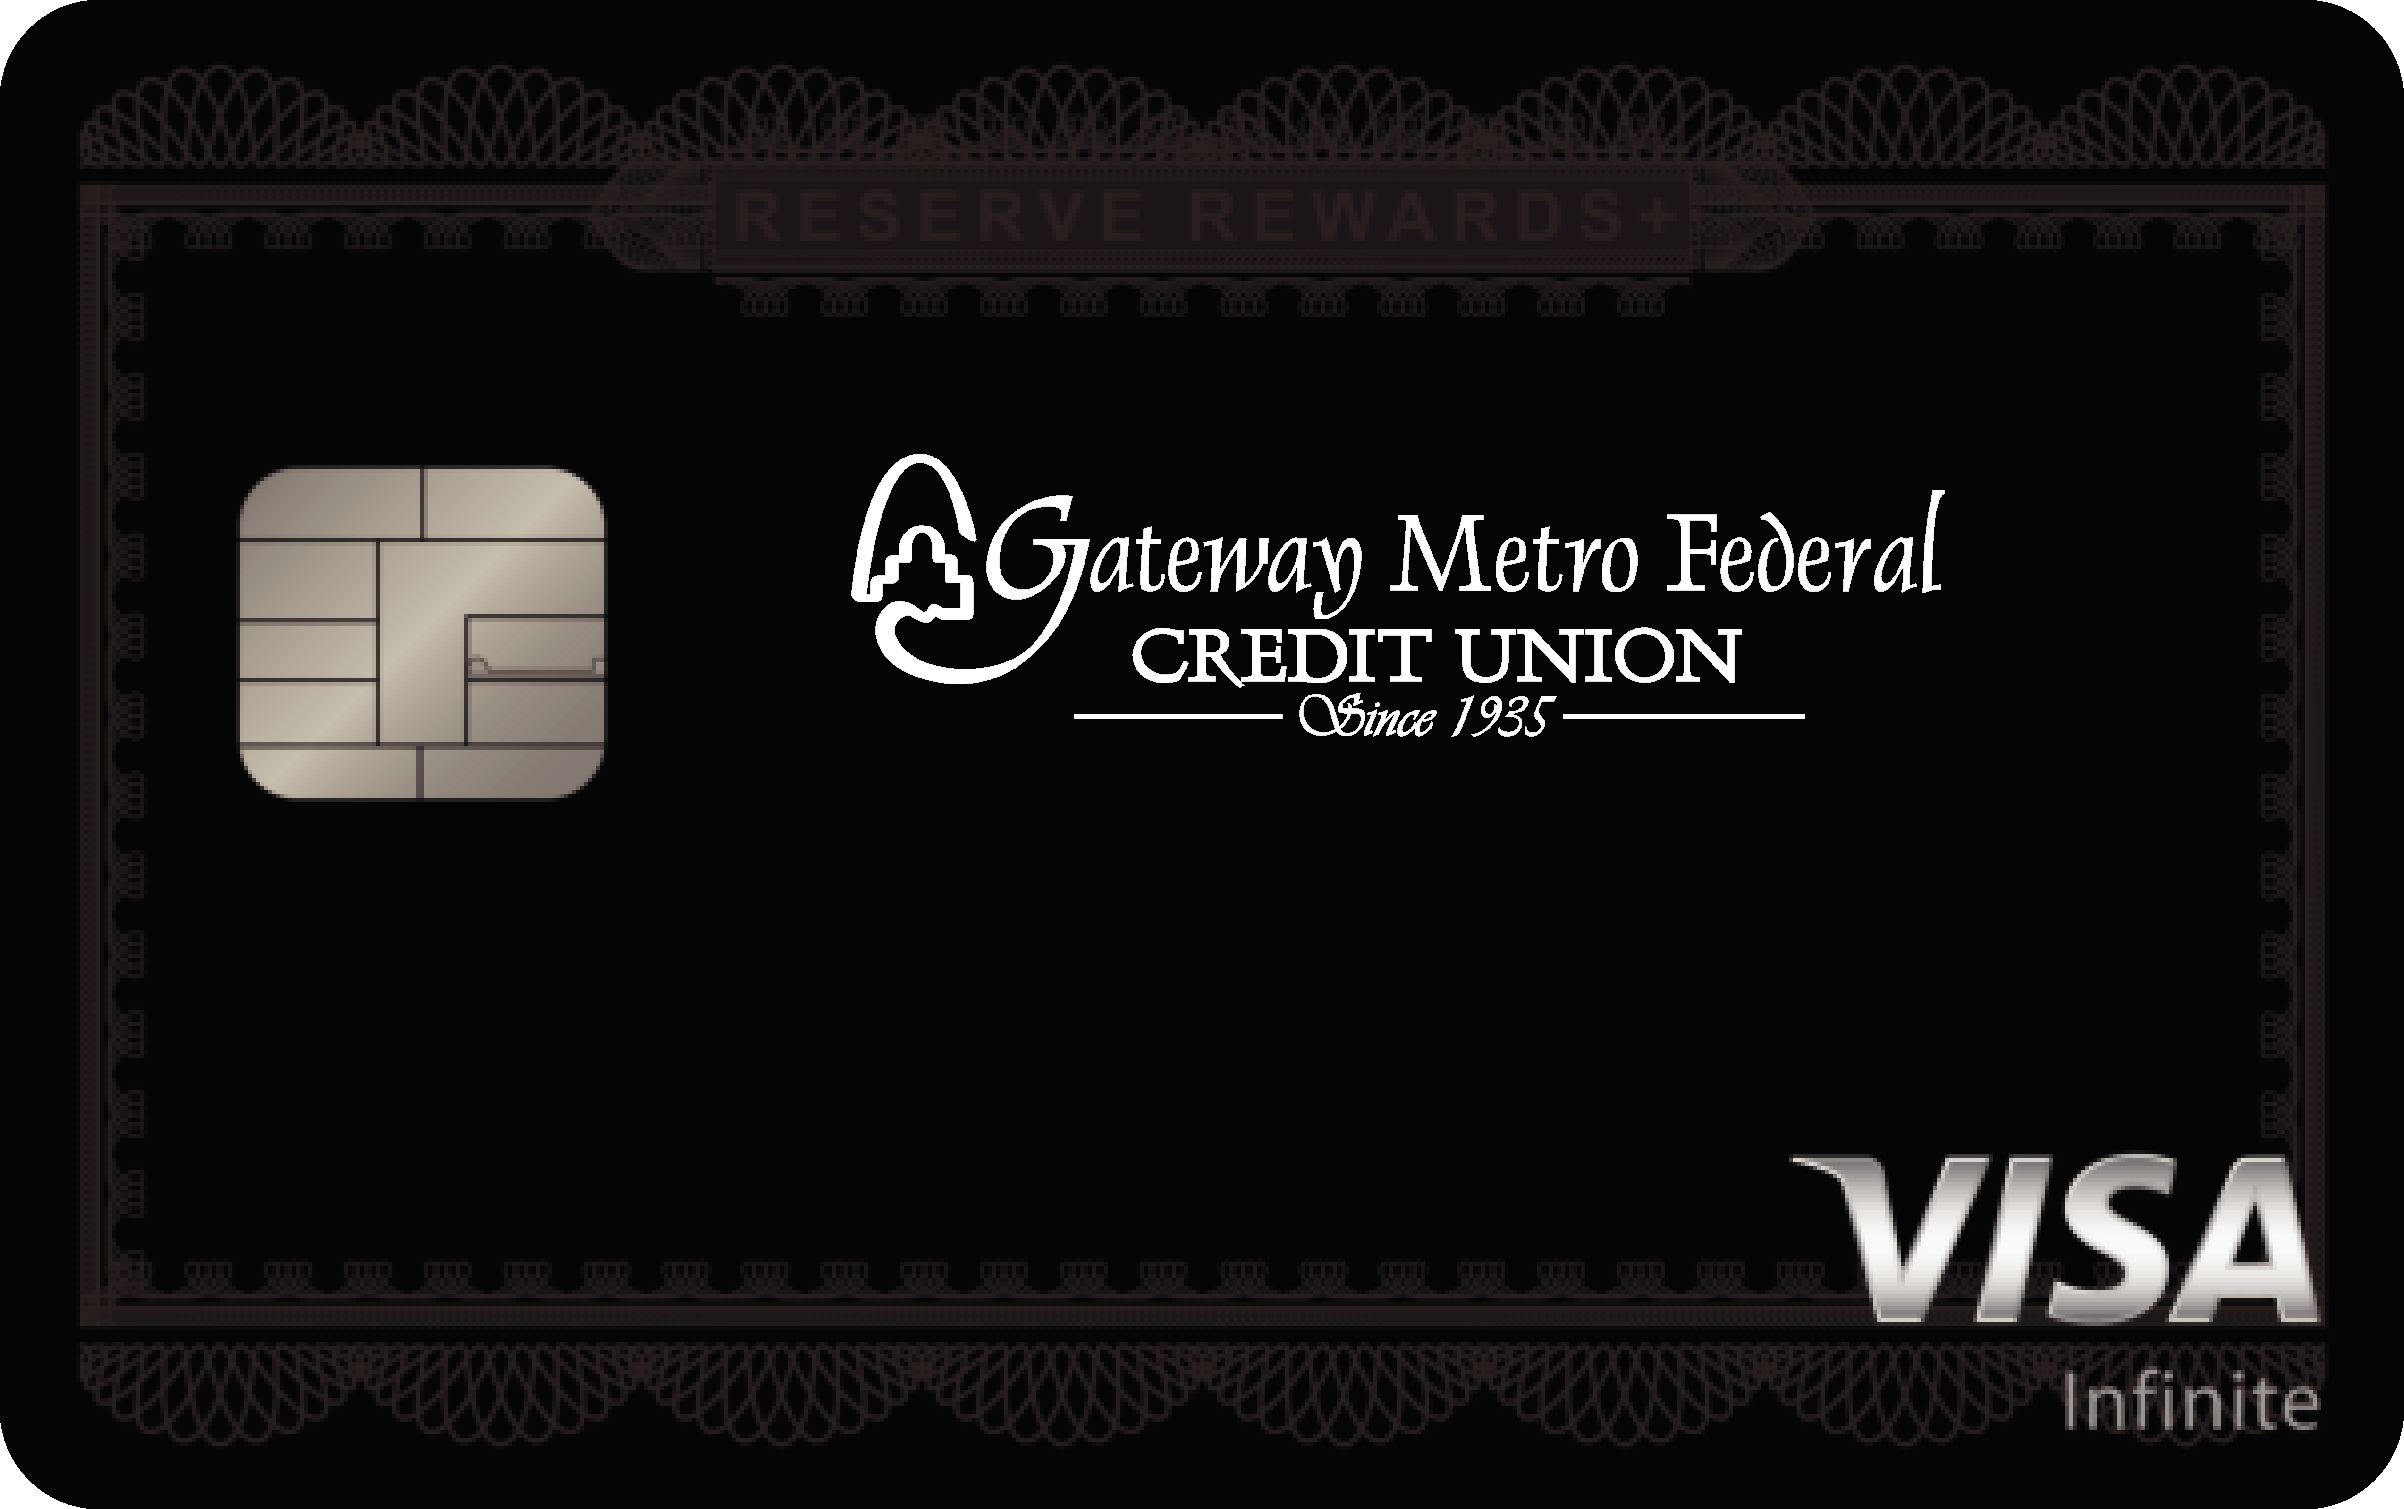 Gateway Metro Federal Credit Union